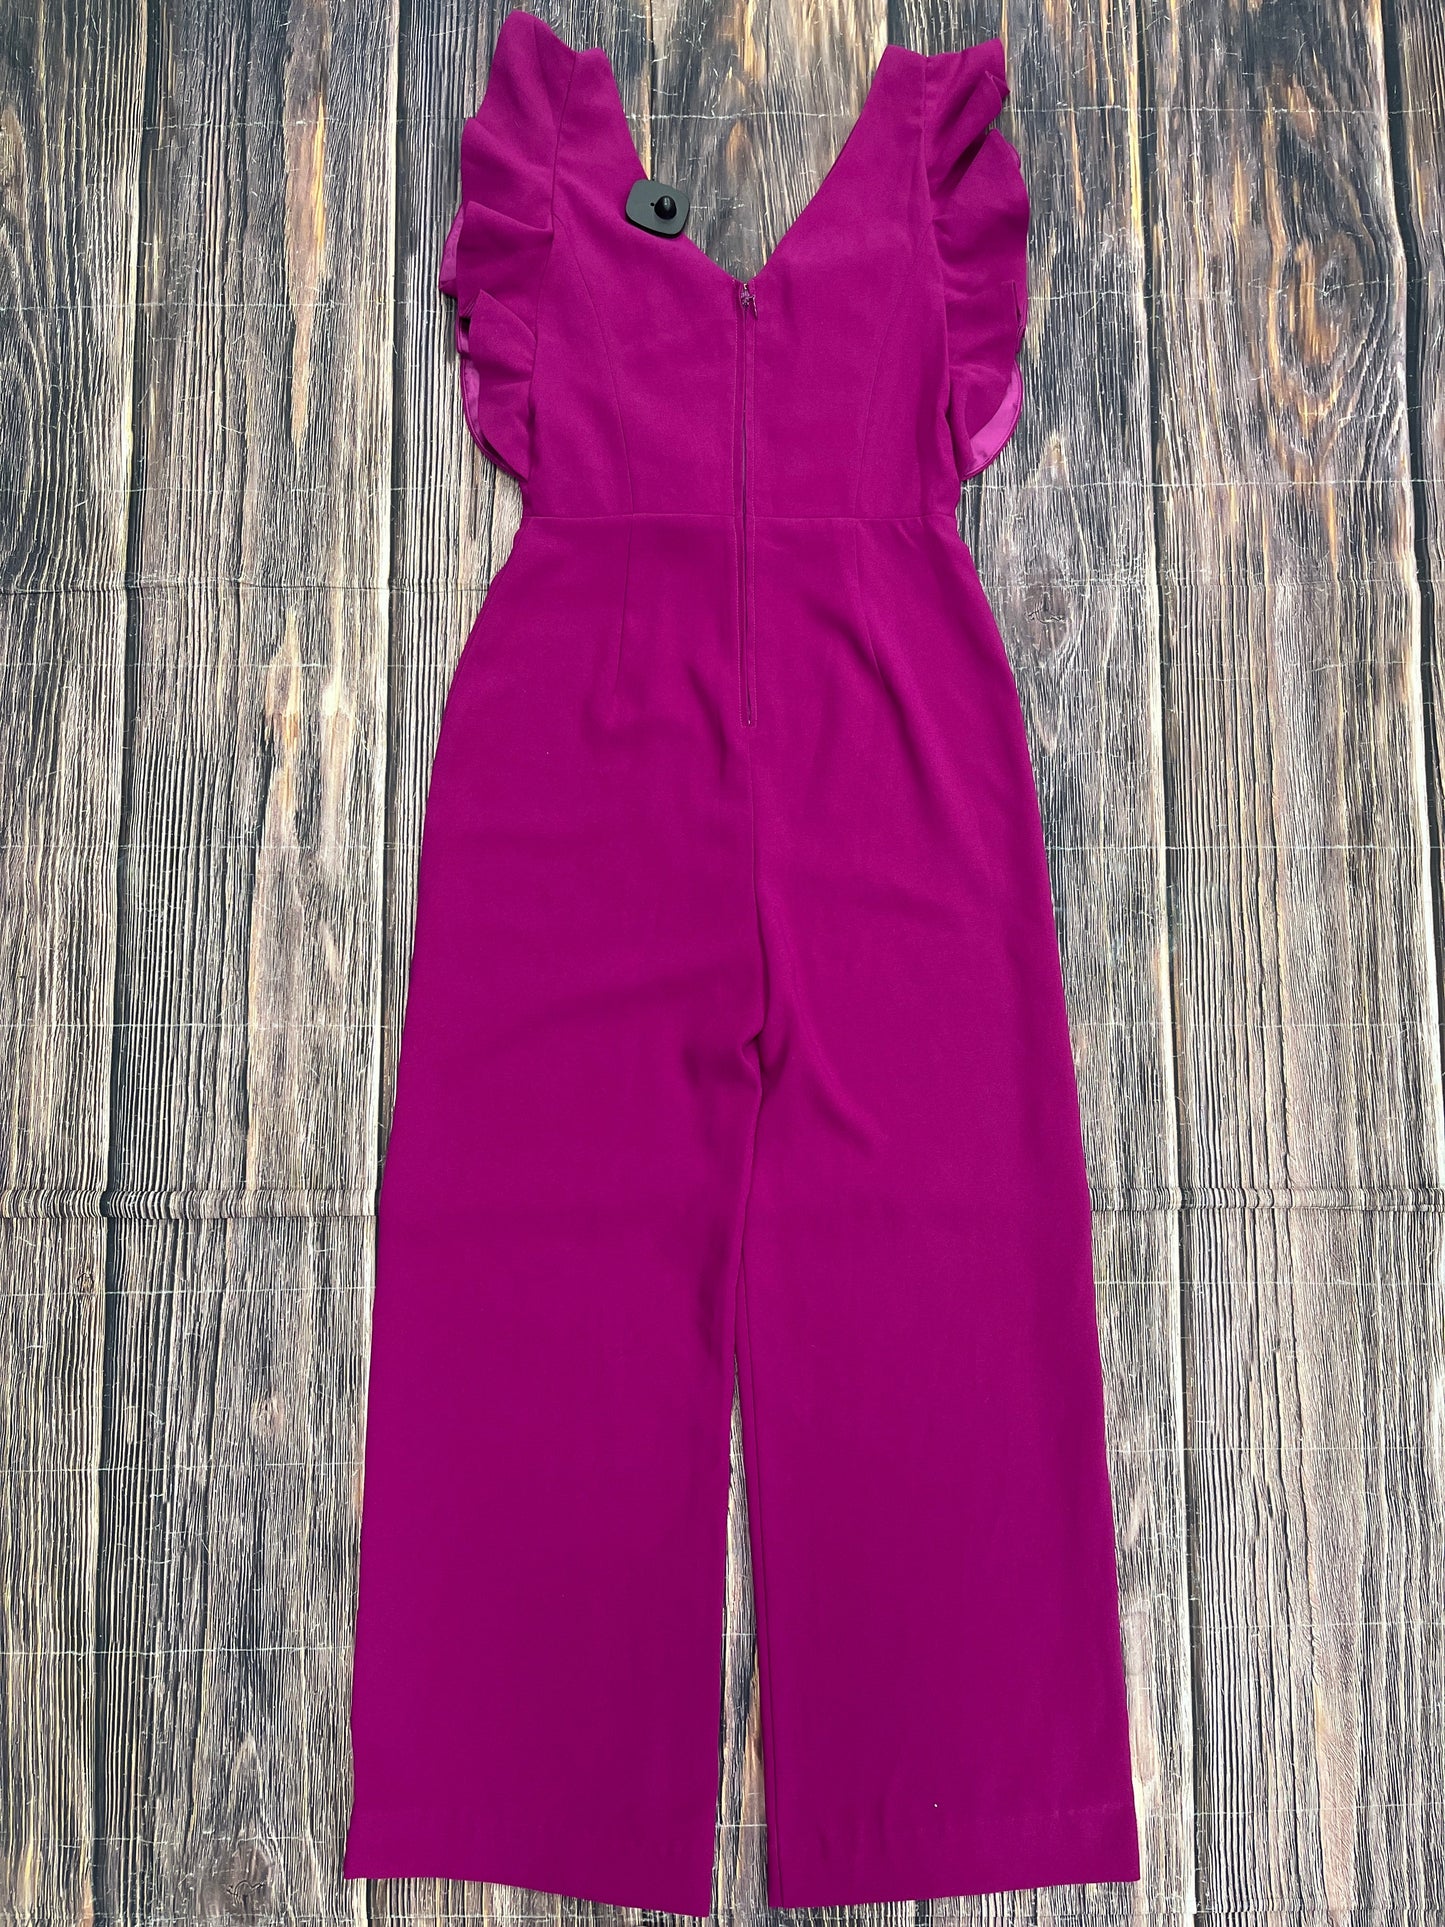 Purple Jumpsuit Lilly Pulitzer, Size Xs